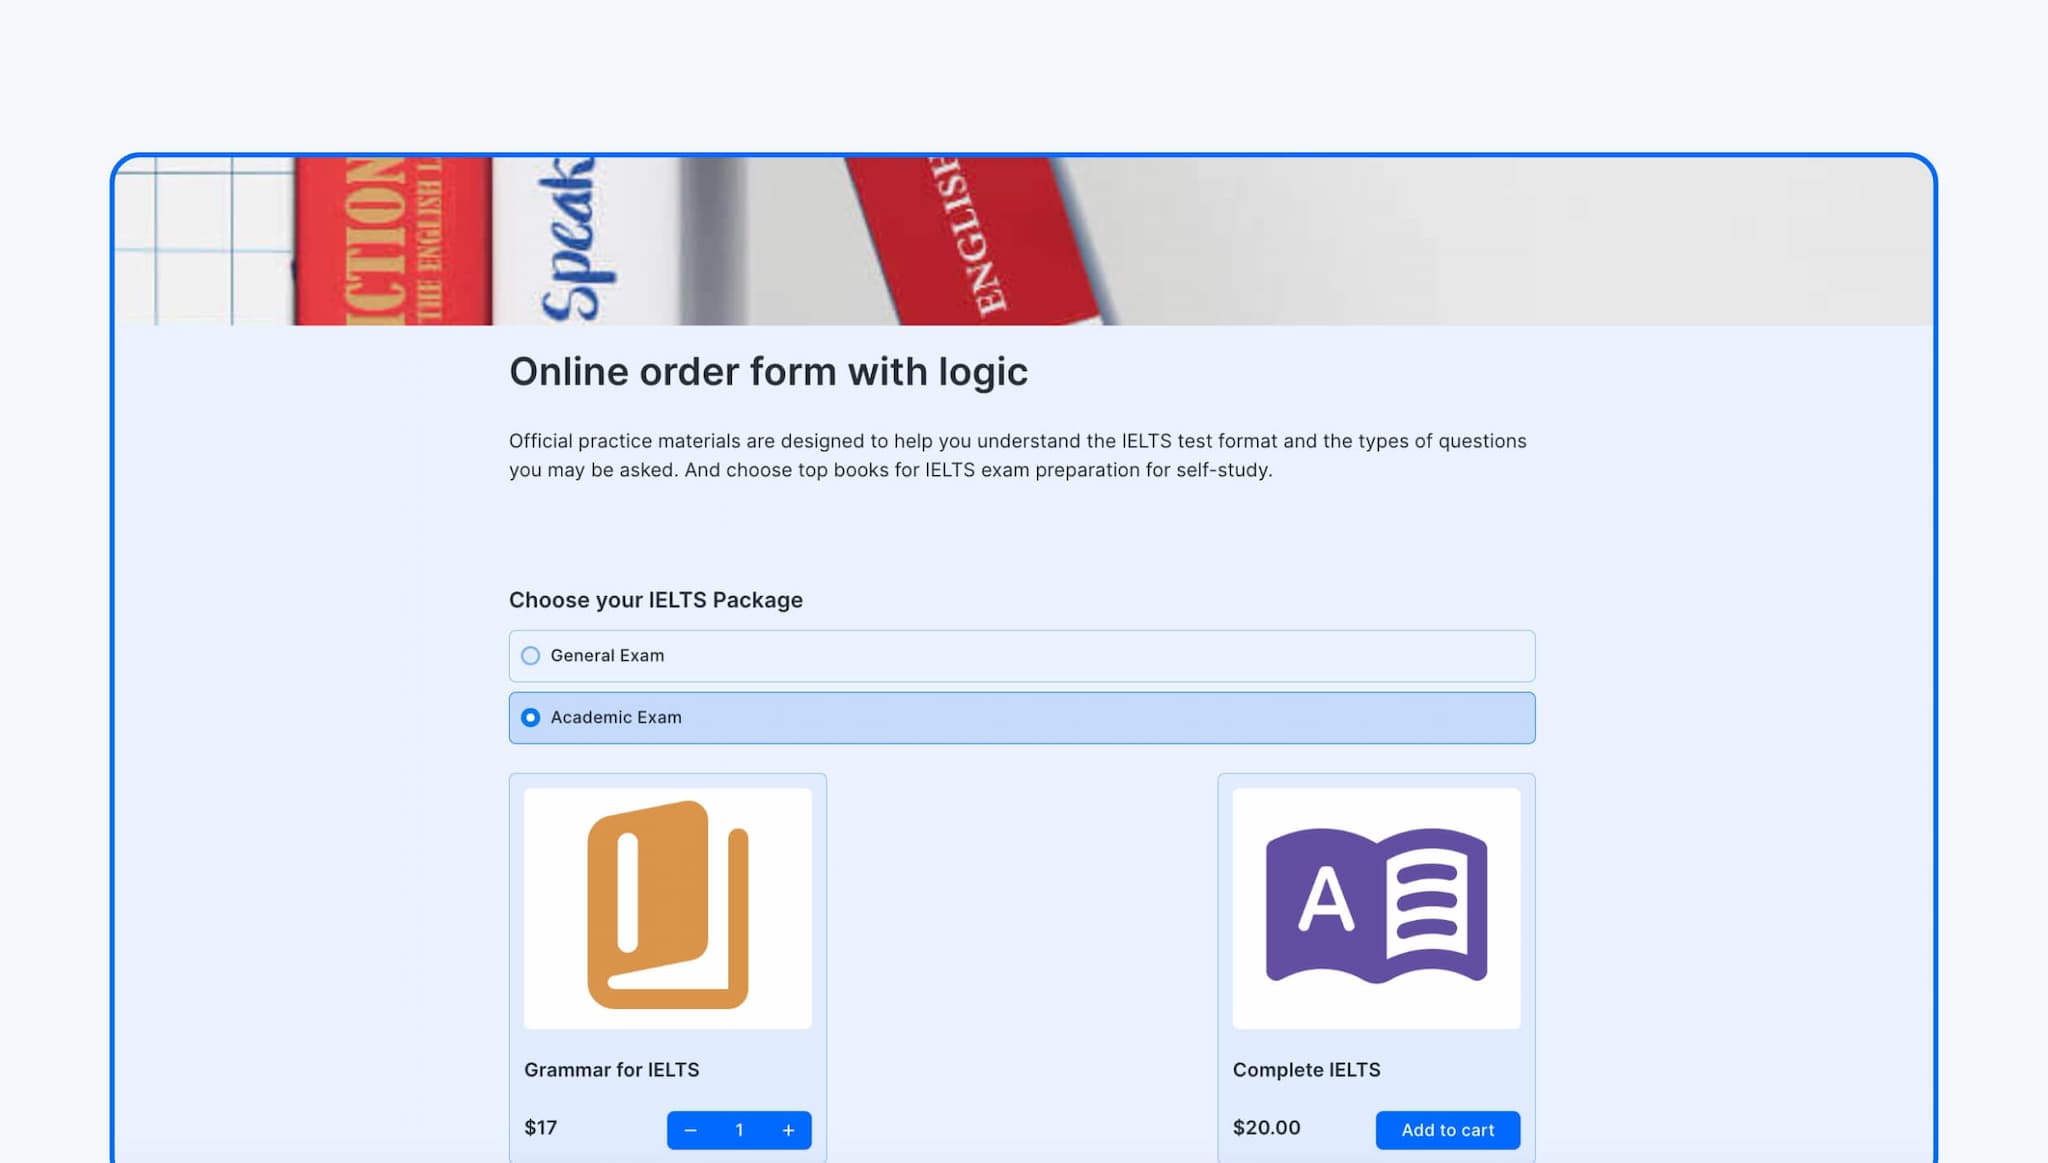 Online order form with logic